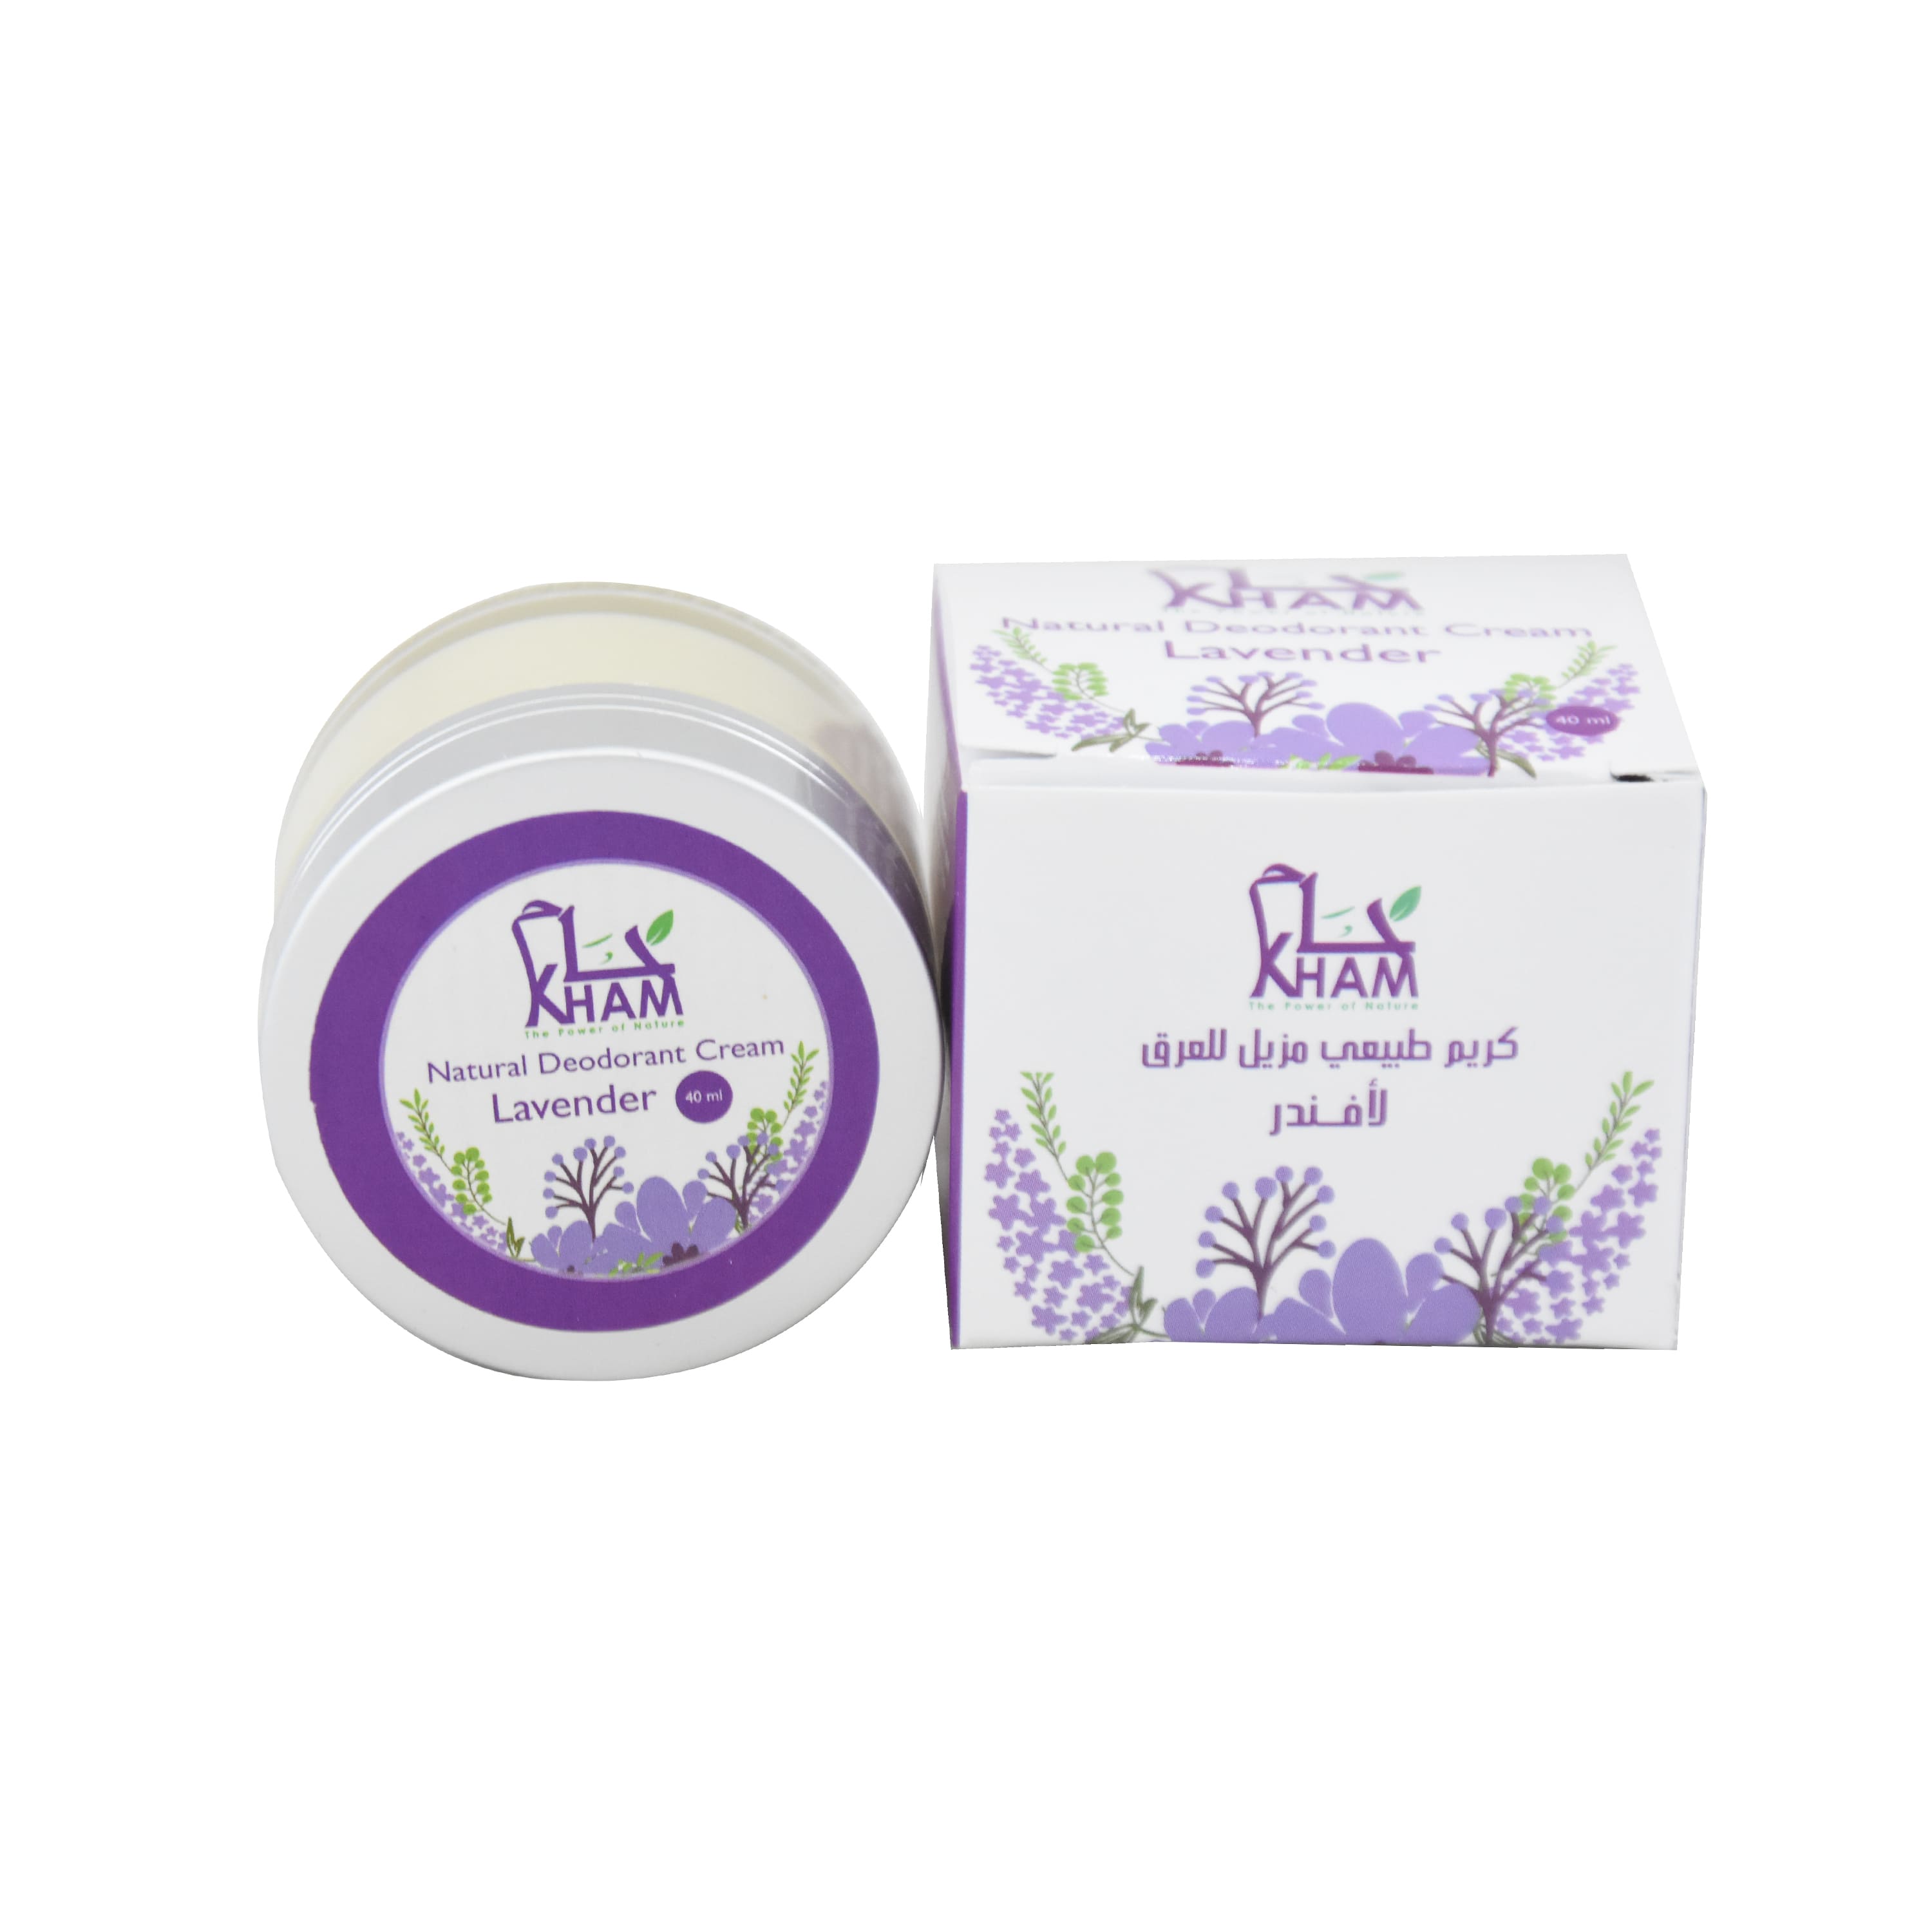 Kham Lavender Natural Deodorant (40 gm)